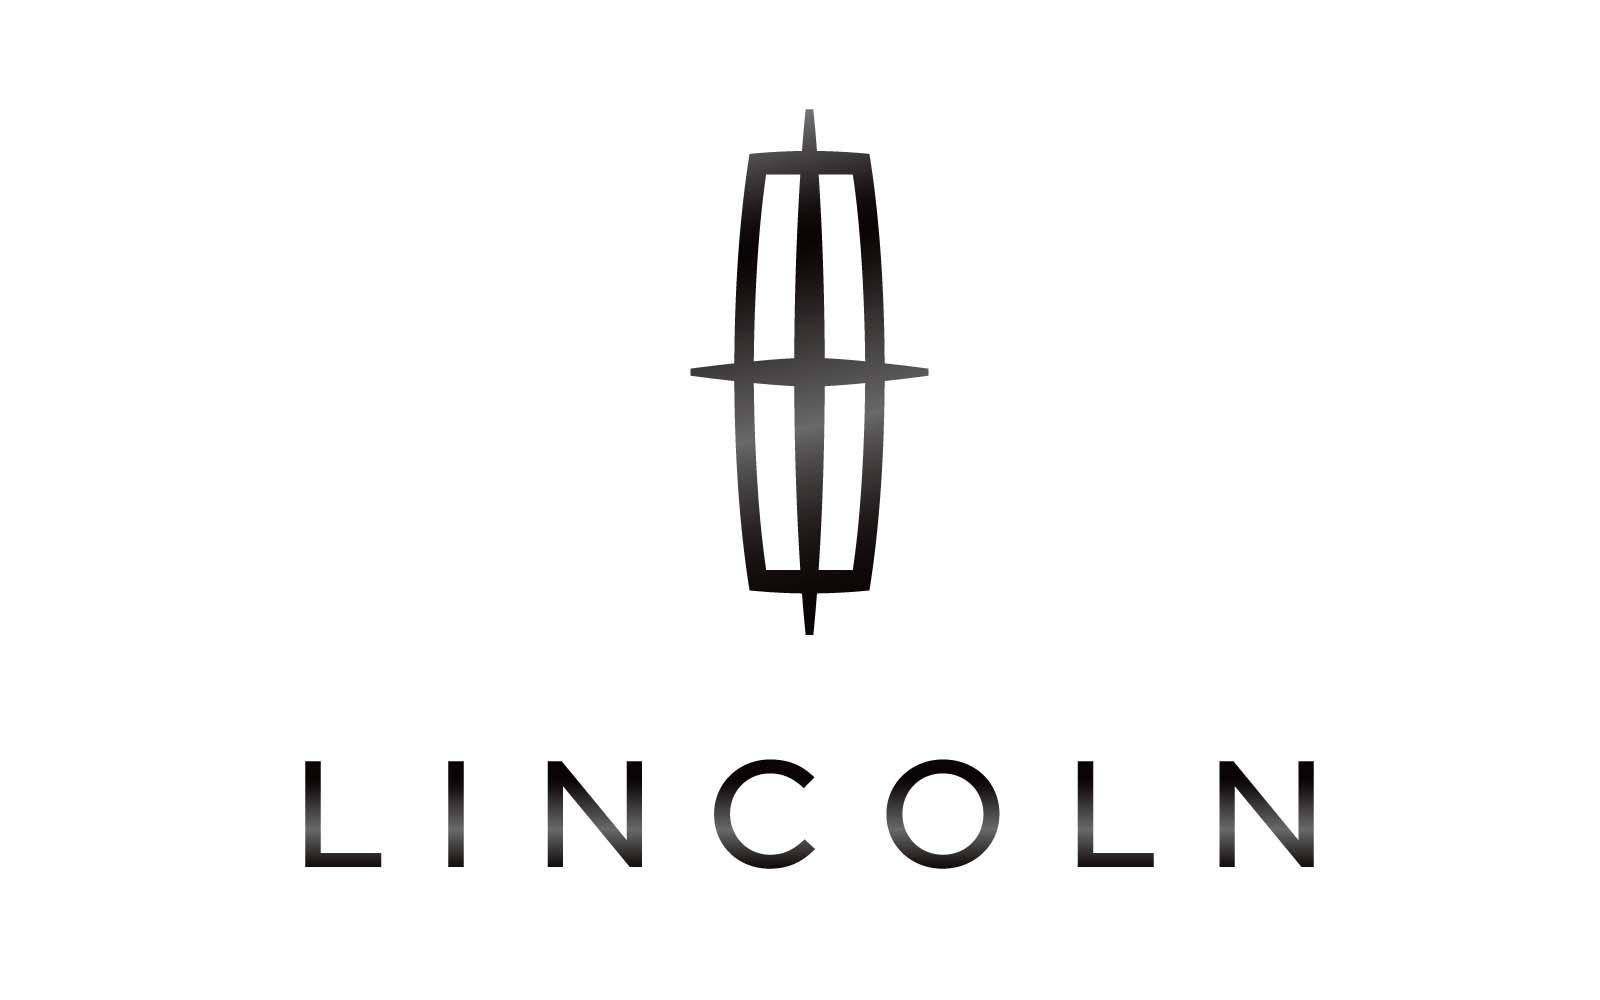 Lincolm Logo - Lincoln logo | Vehicle Logos | Lincoln logo, Car symbols, Car brands ...